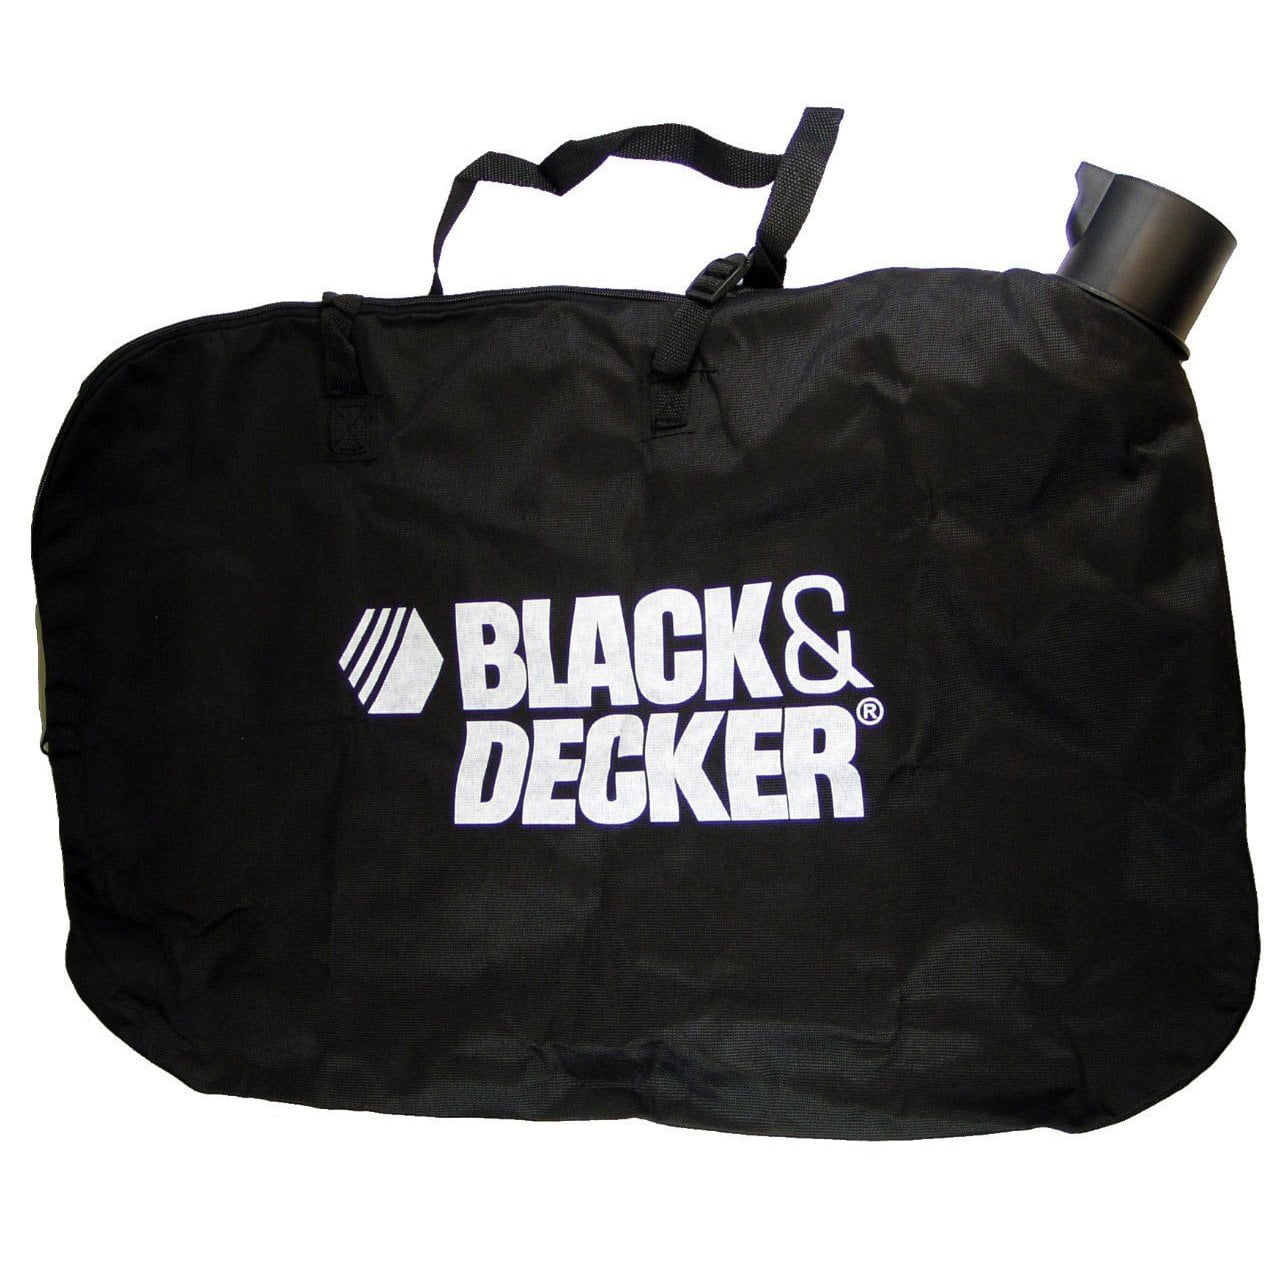 BV-008 Replacement Leaf Blower Vacuum Bags - Disposable Leaf Blower Bag Compatible with Black+decker BV3600, BV3800, Bv6000, Bv6600, LH4500, LH5000